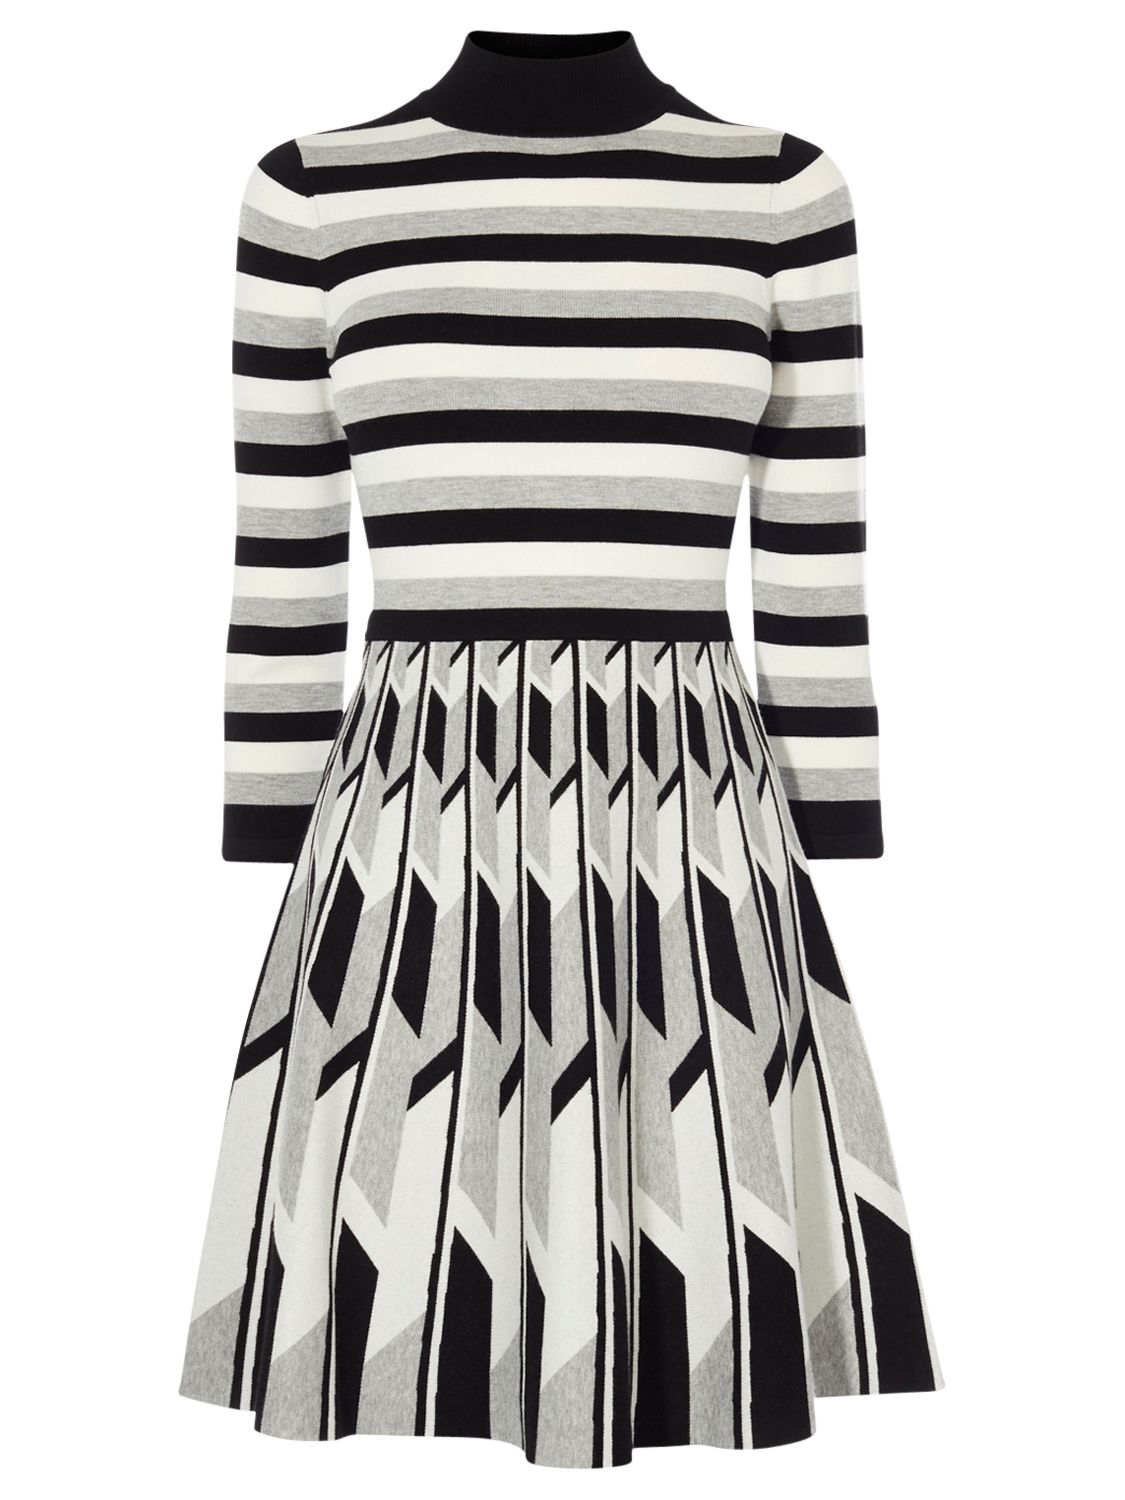 Karen Millen Geometric Stripe Knitted Dress, Multi